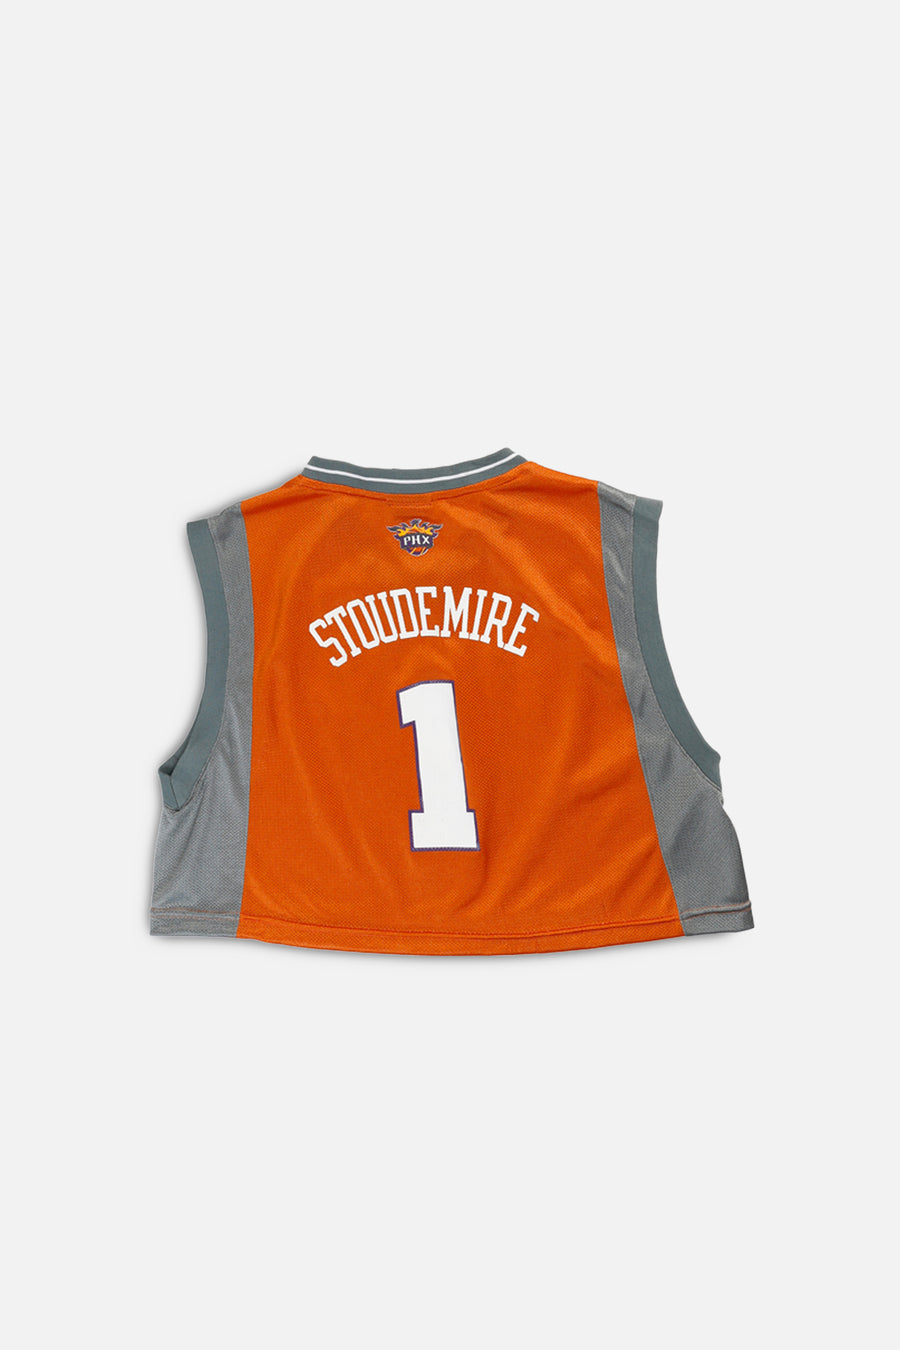 Rework Phoenix Suns NBA Crop Jersey - L